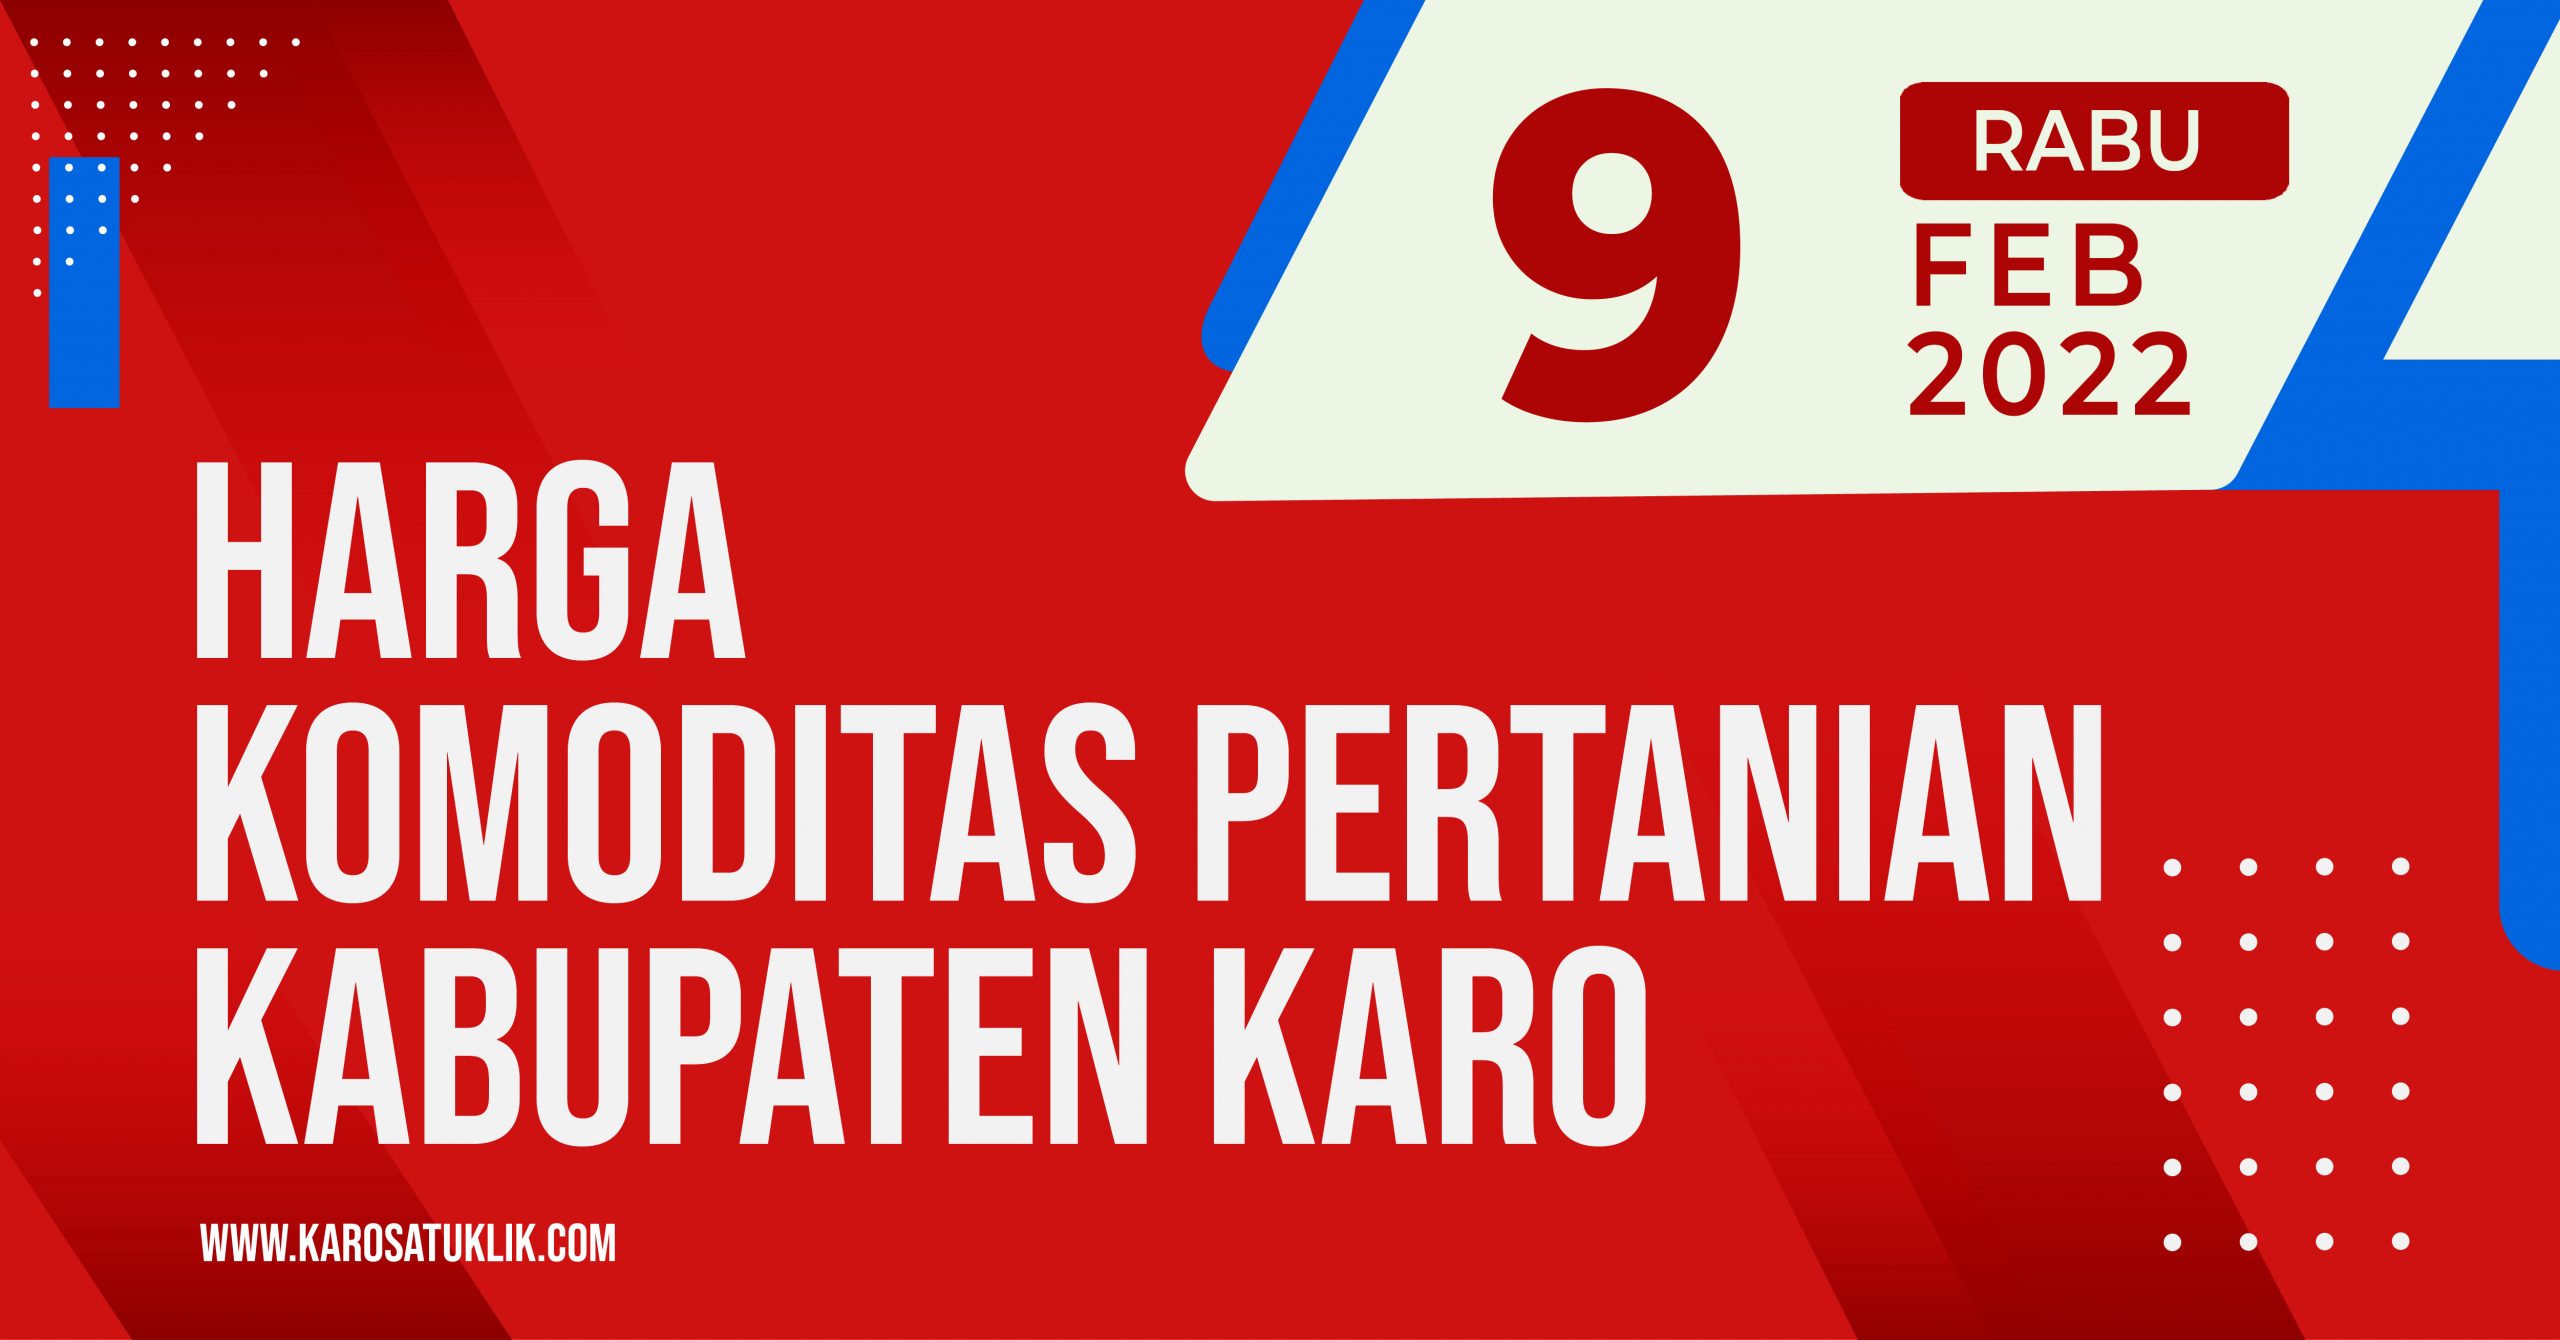 Daftar Harga Komoditas Pertanian Kabupaten Karo, 9 Februari 2022